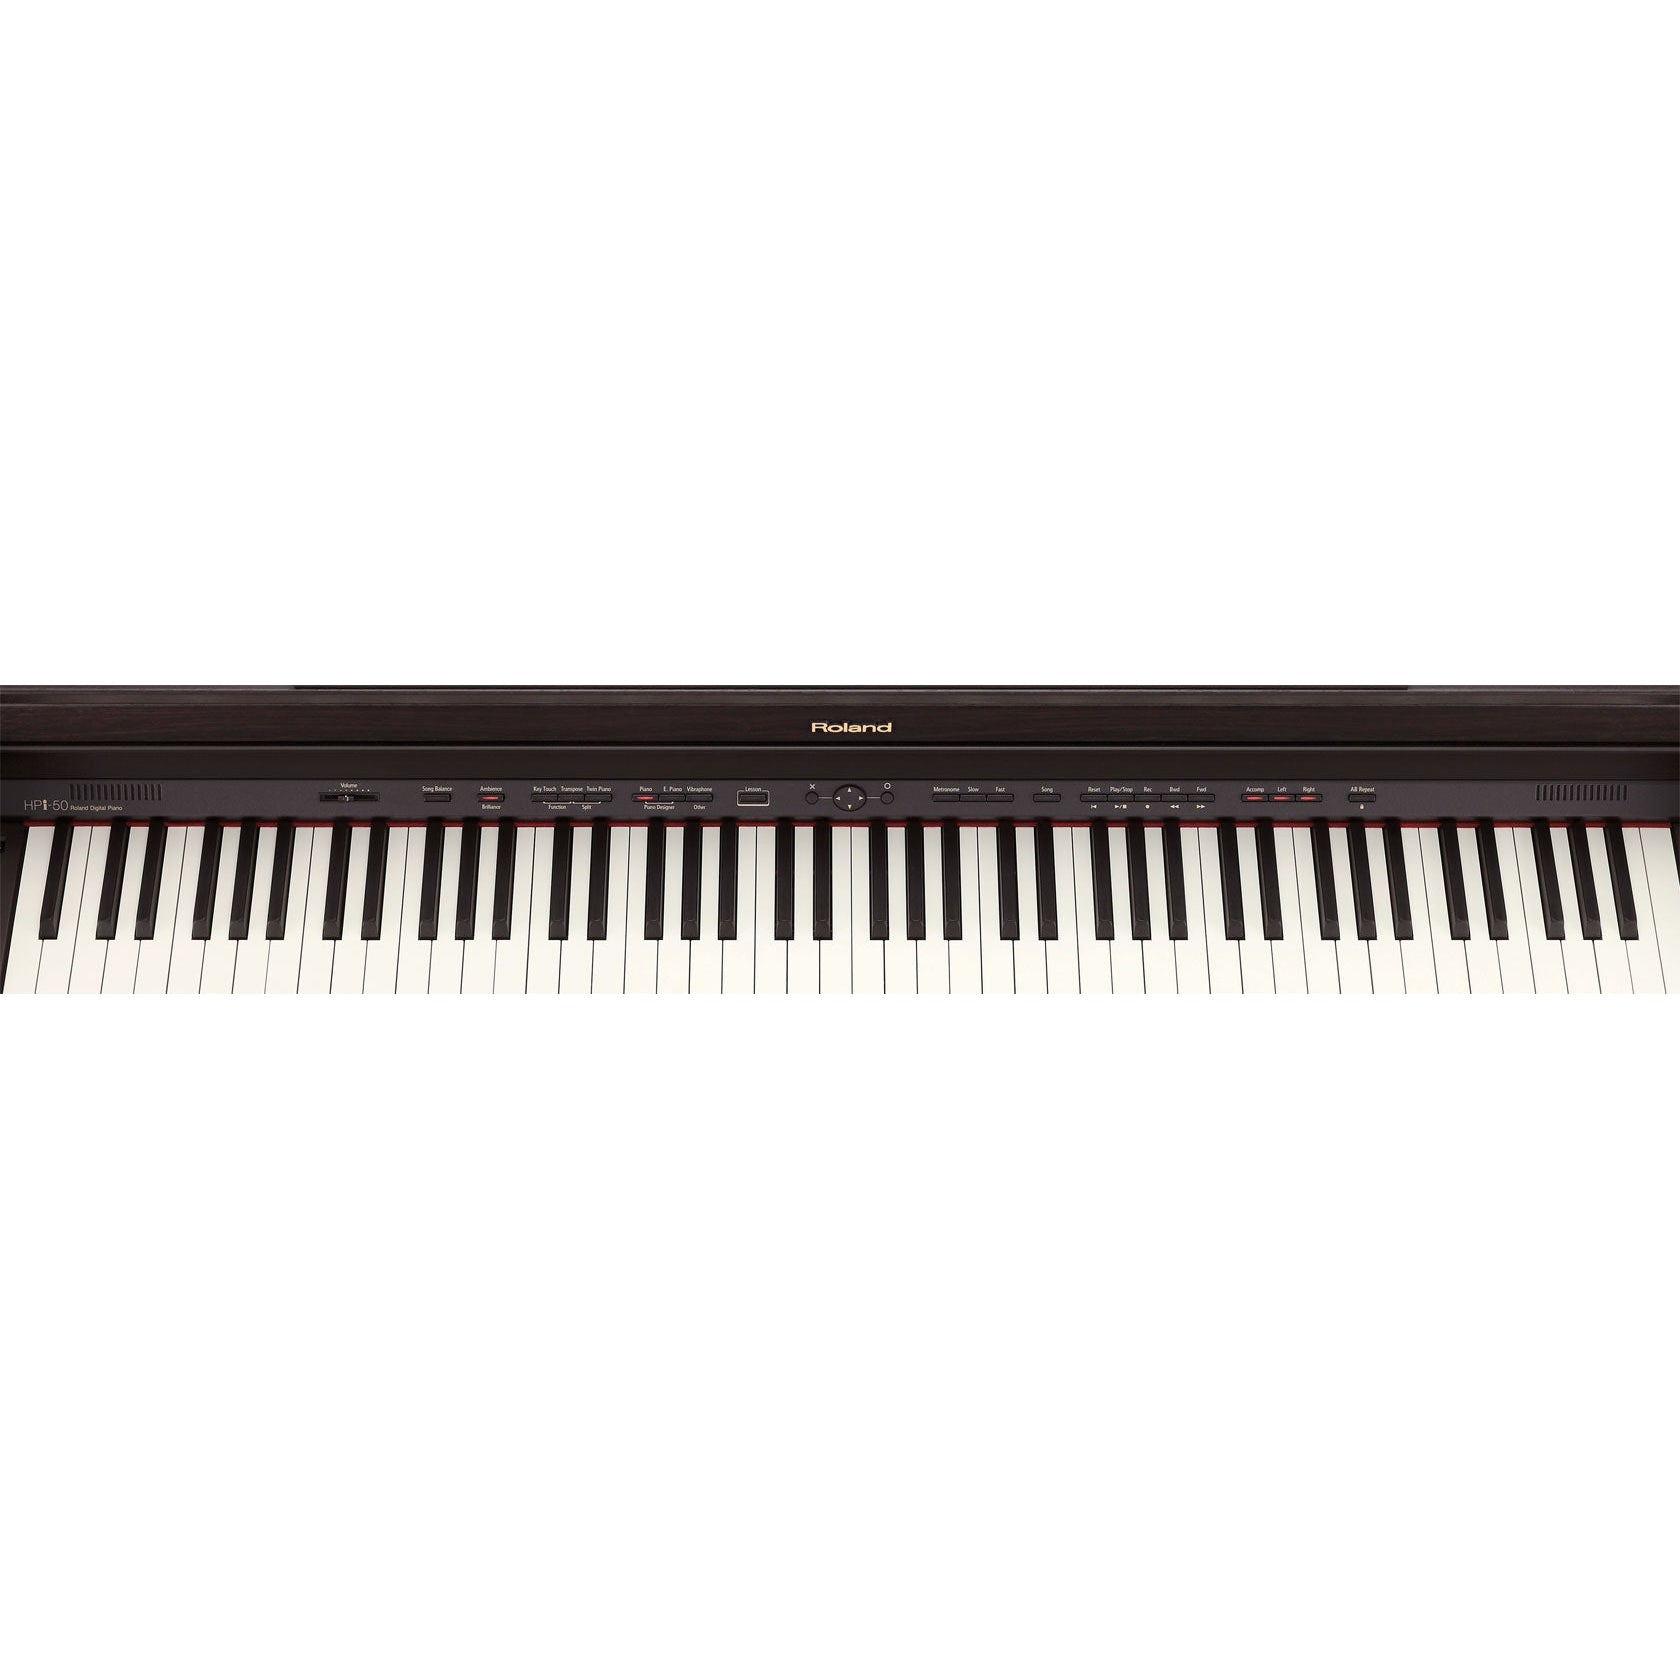 Đàn Piano Điện Roland HPi-50 - Qua Sử Dụng